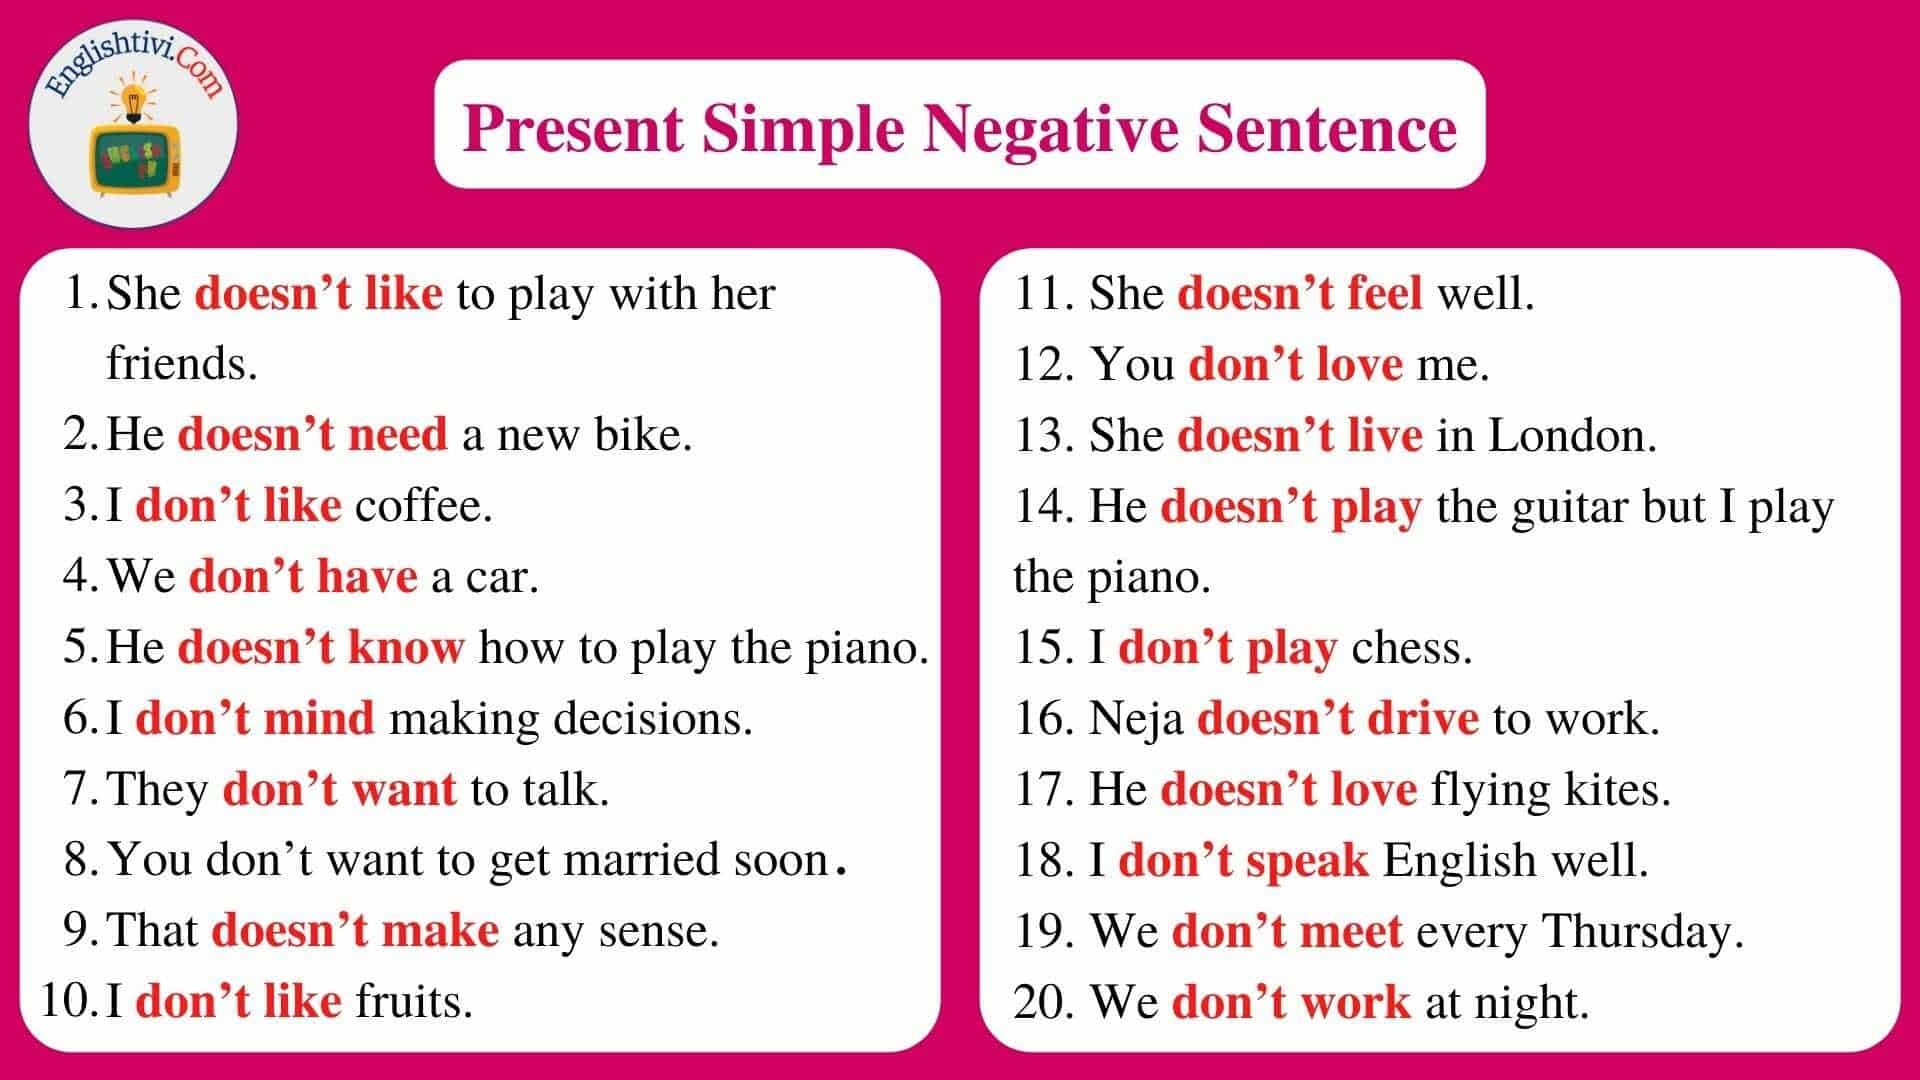 present-simple-tense-negative-sentences-in-english-woodward-english